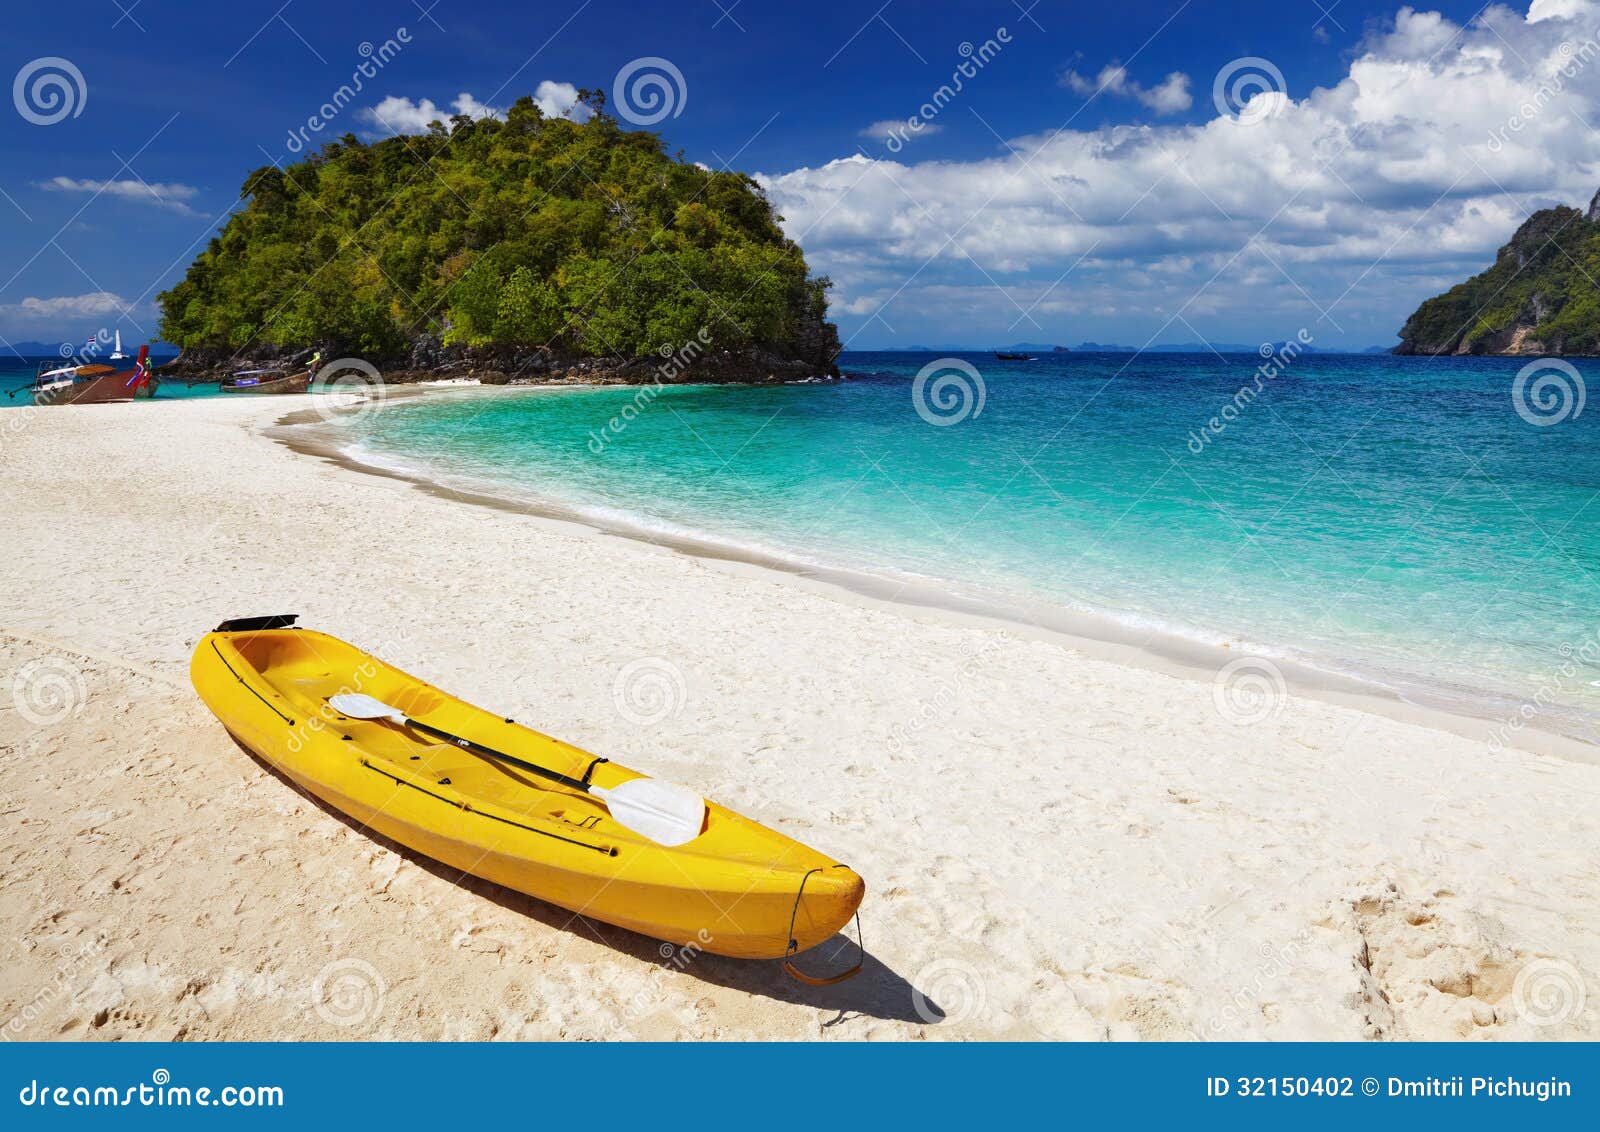 Tropical Beach, Thailand Stock Photography - Image: 32150402